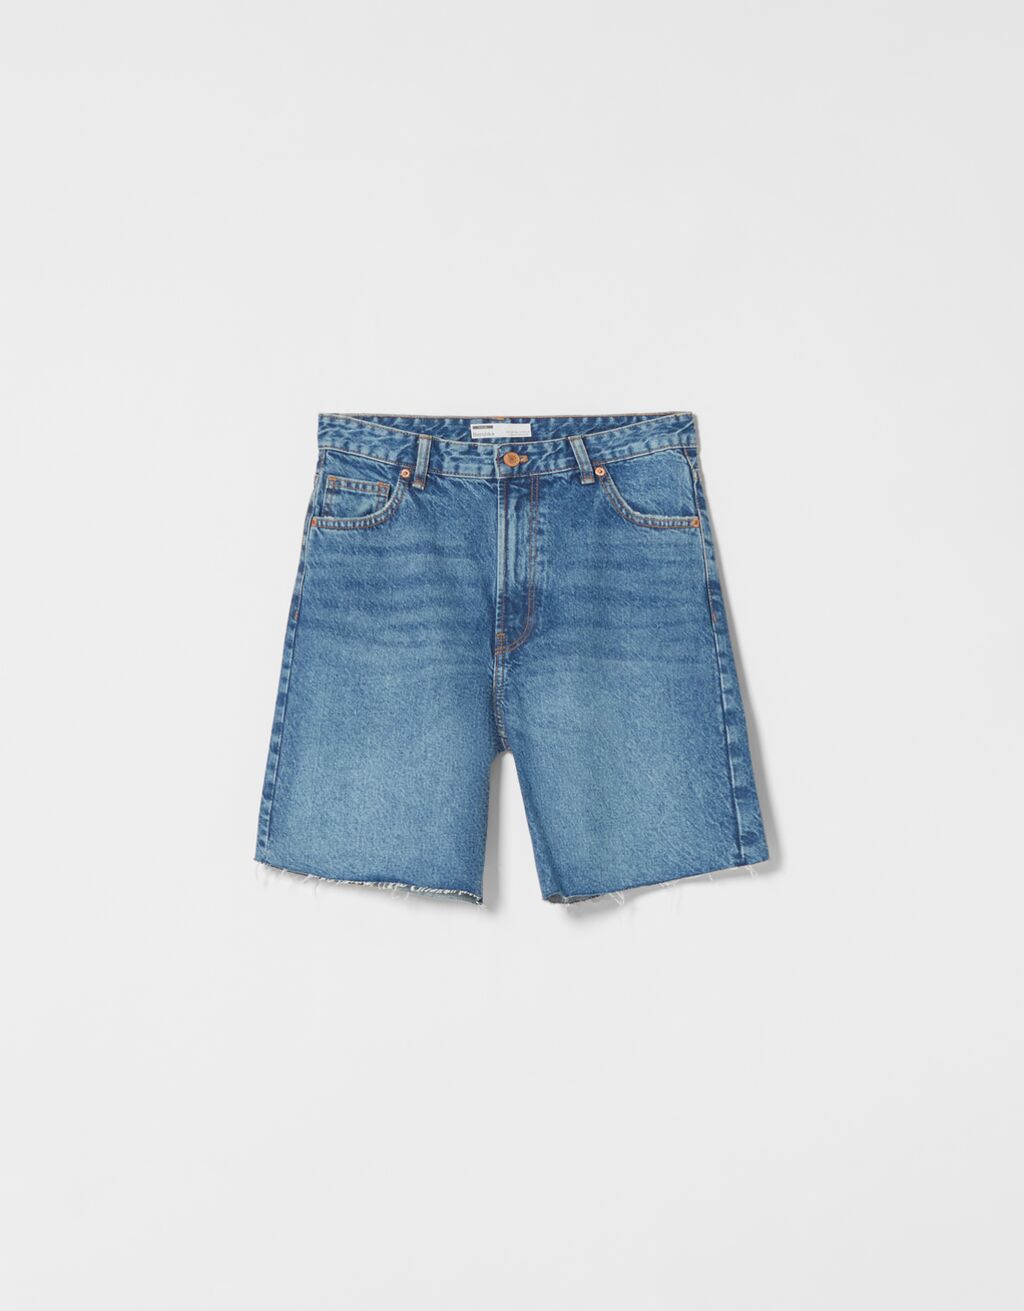 Vintage denim Bermuda shorts with rips